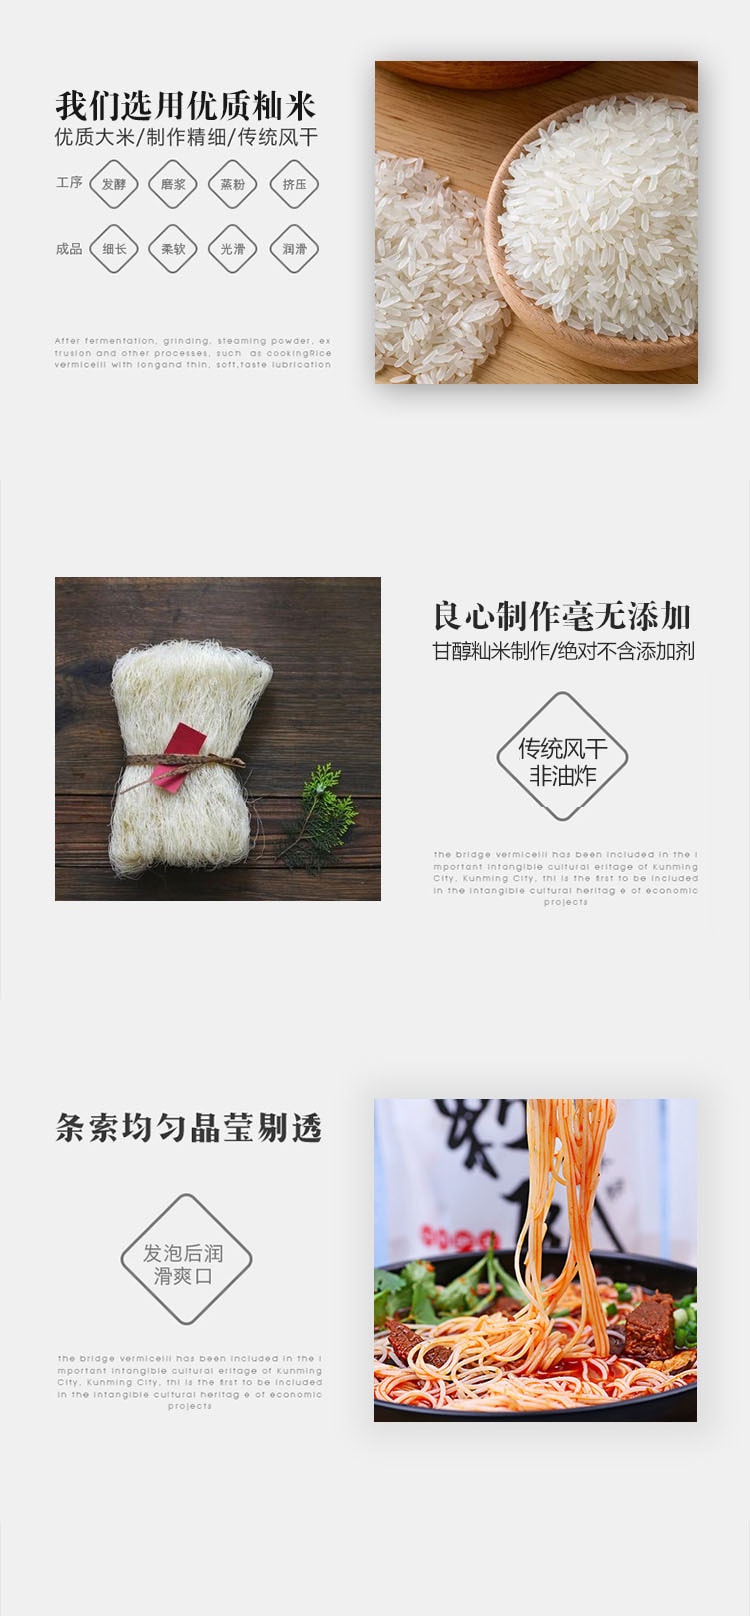 Sichuan Style Chicken Flavor Rice Noodle 240g